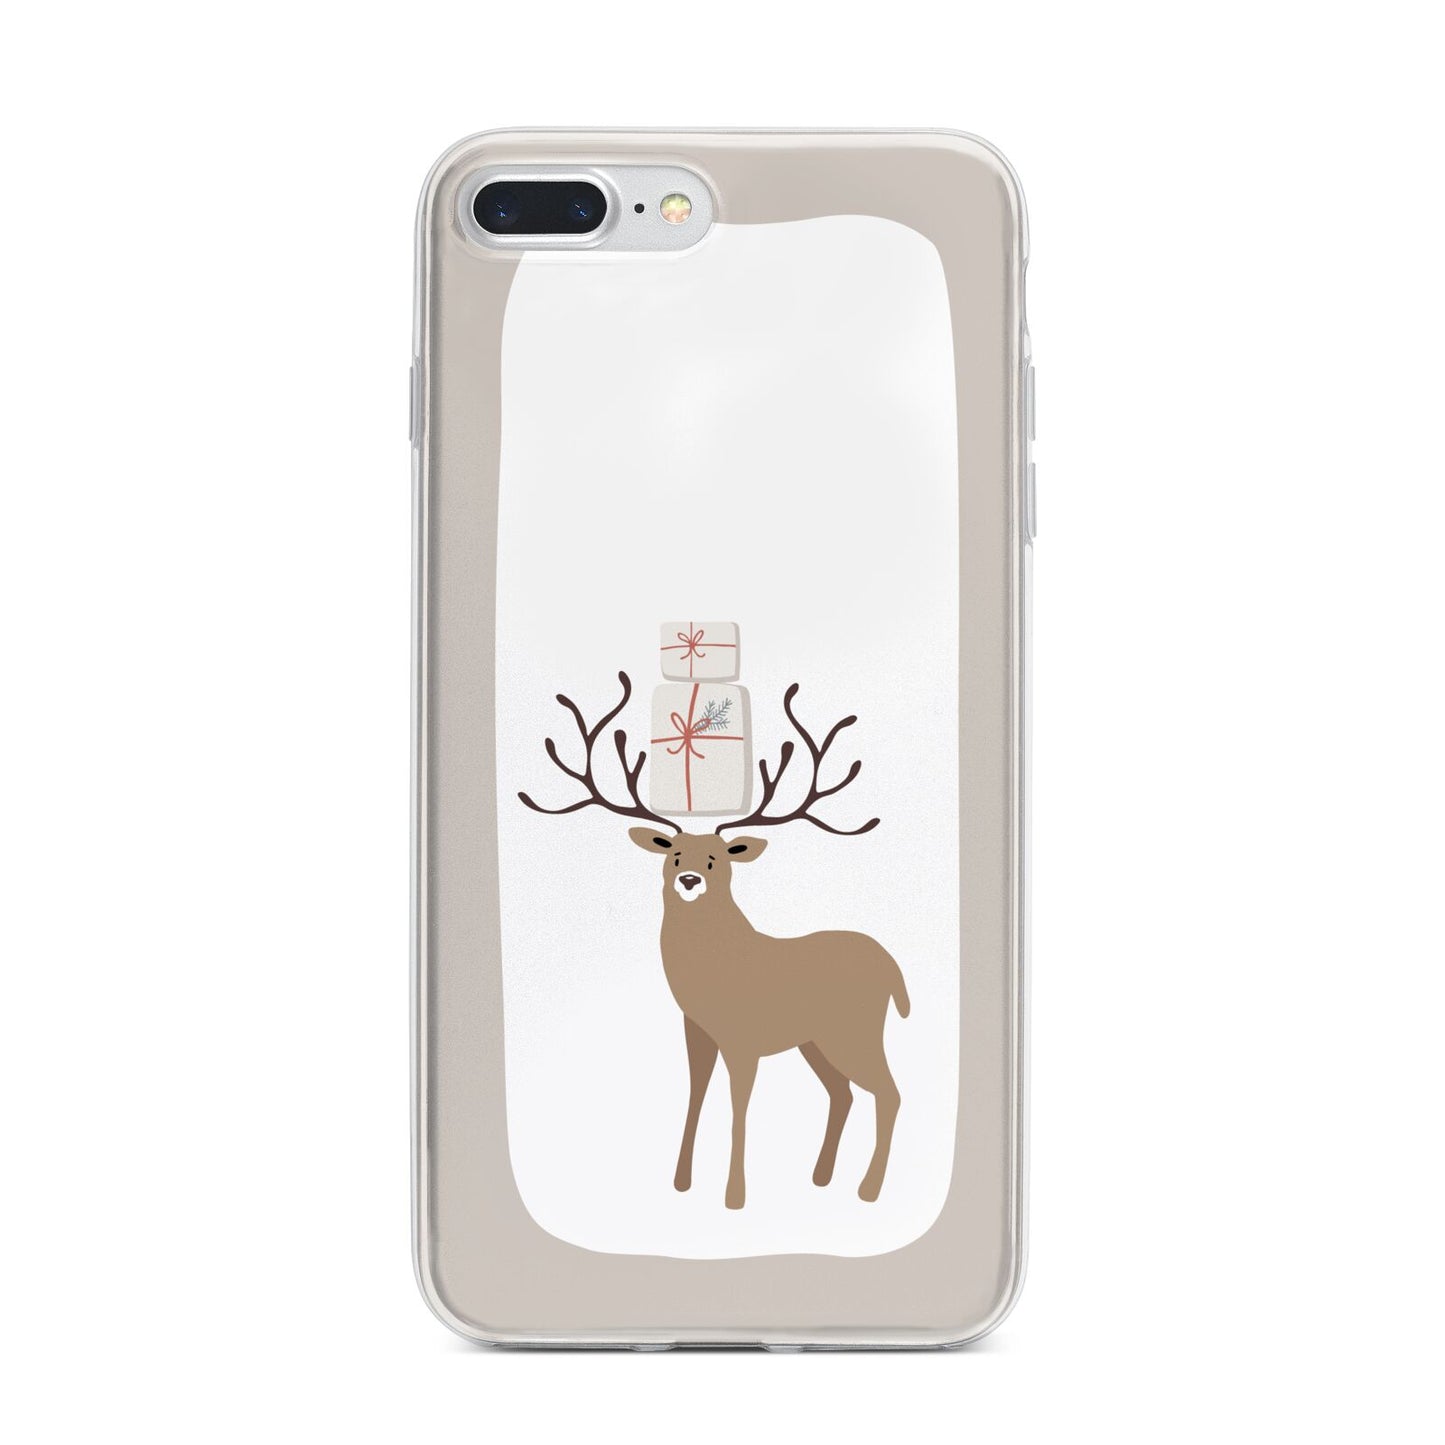 Reindeer Presents iPhone 7 Plus Bumper Case on Silver iPhone